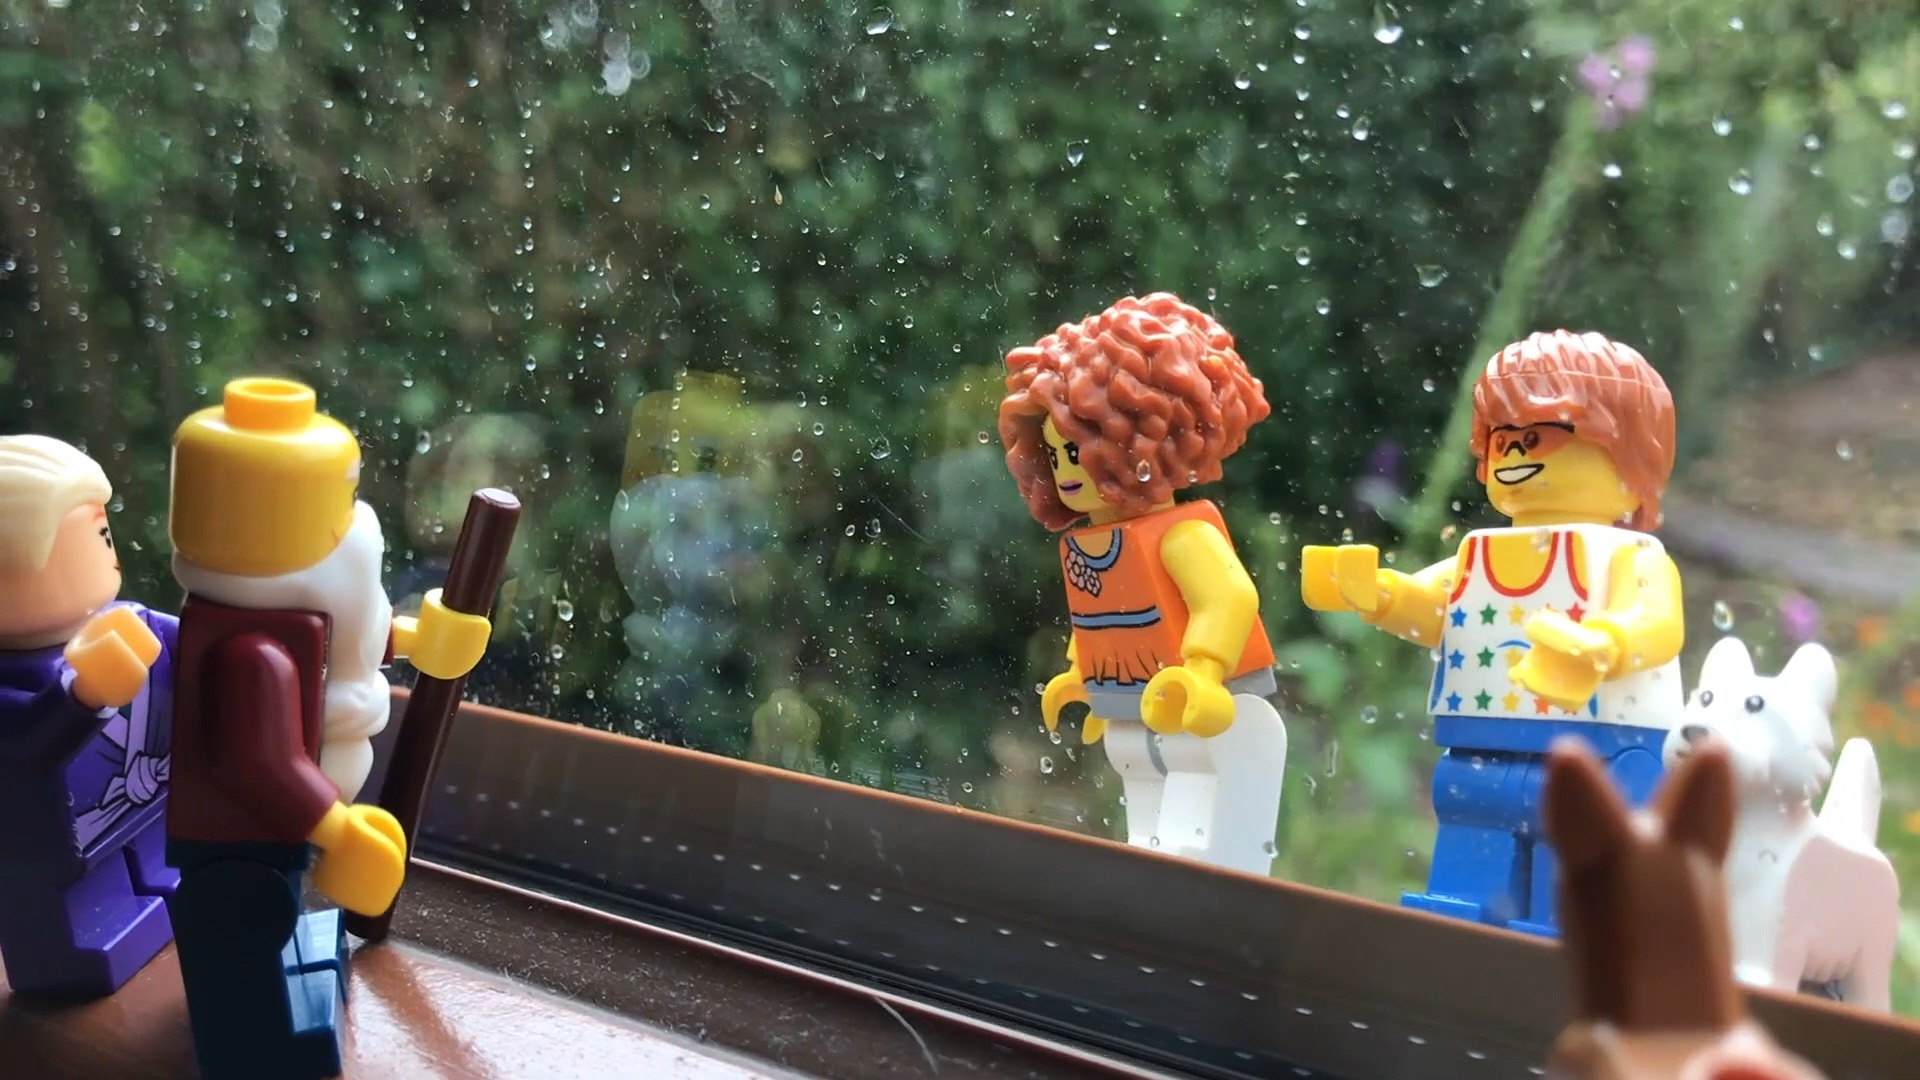 Lego scene set between a window pane.